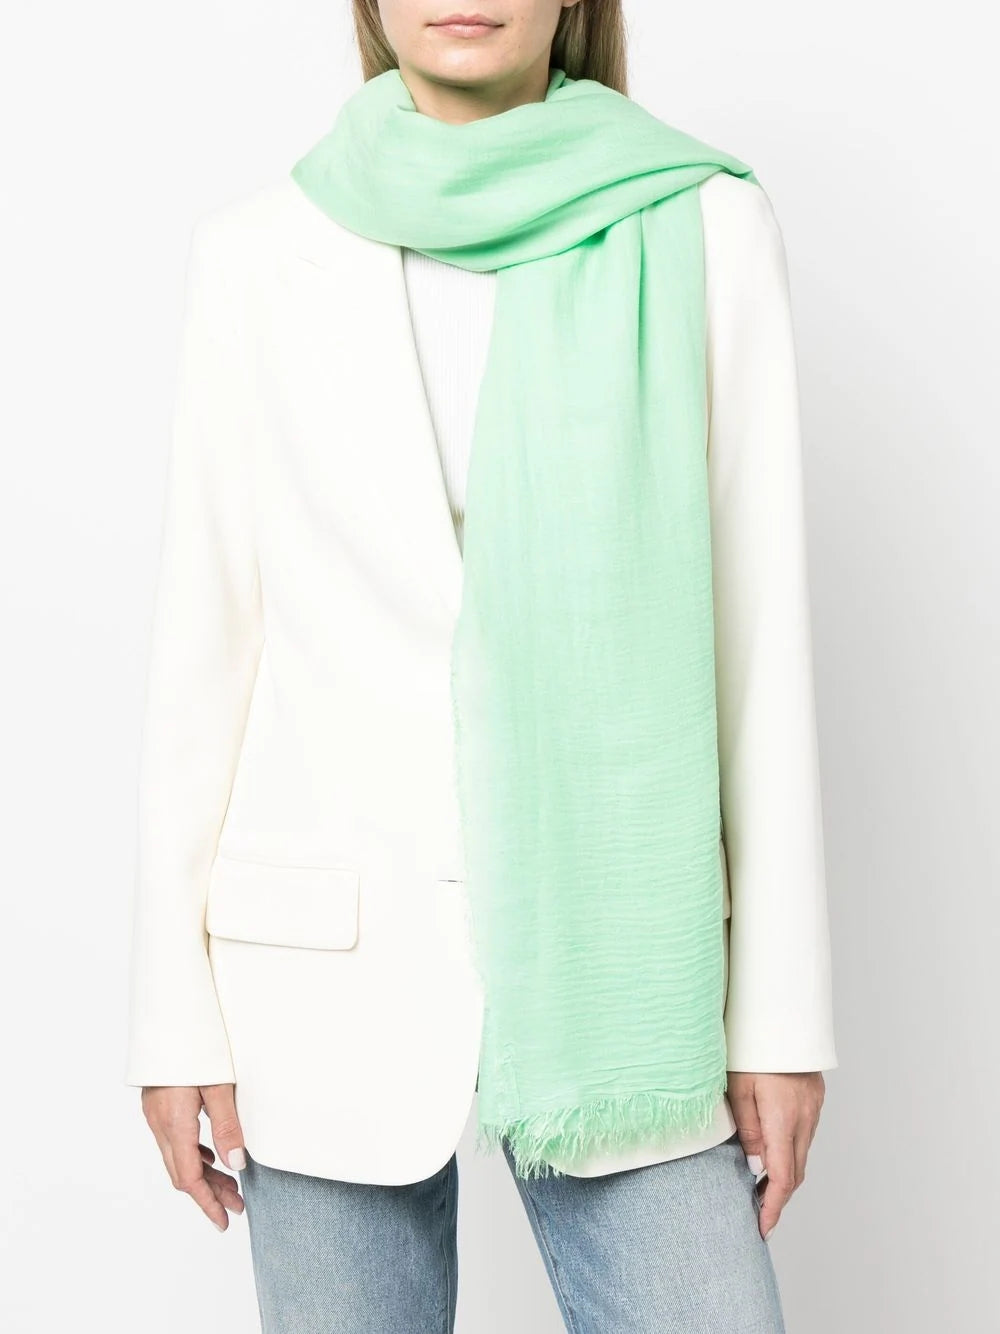 Frayed-edge scarf, mint green